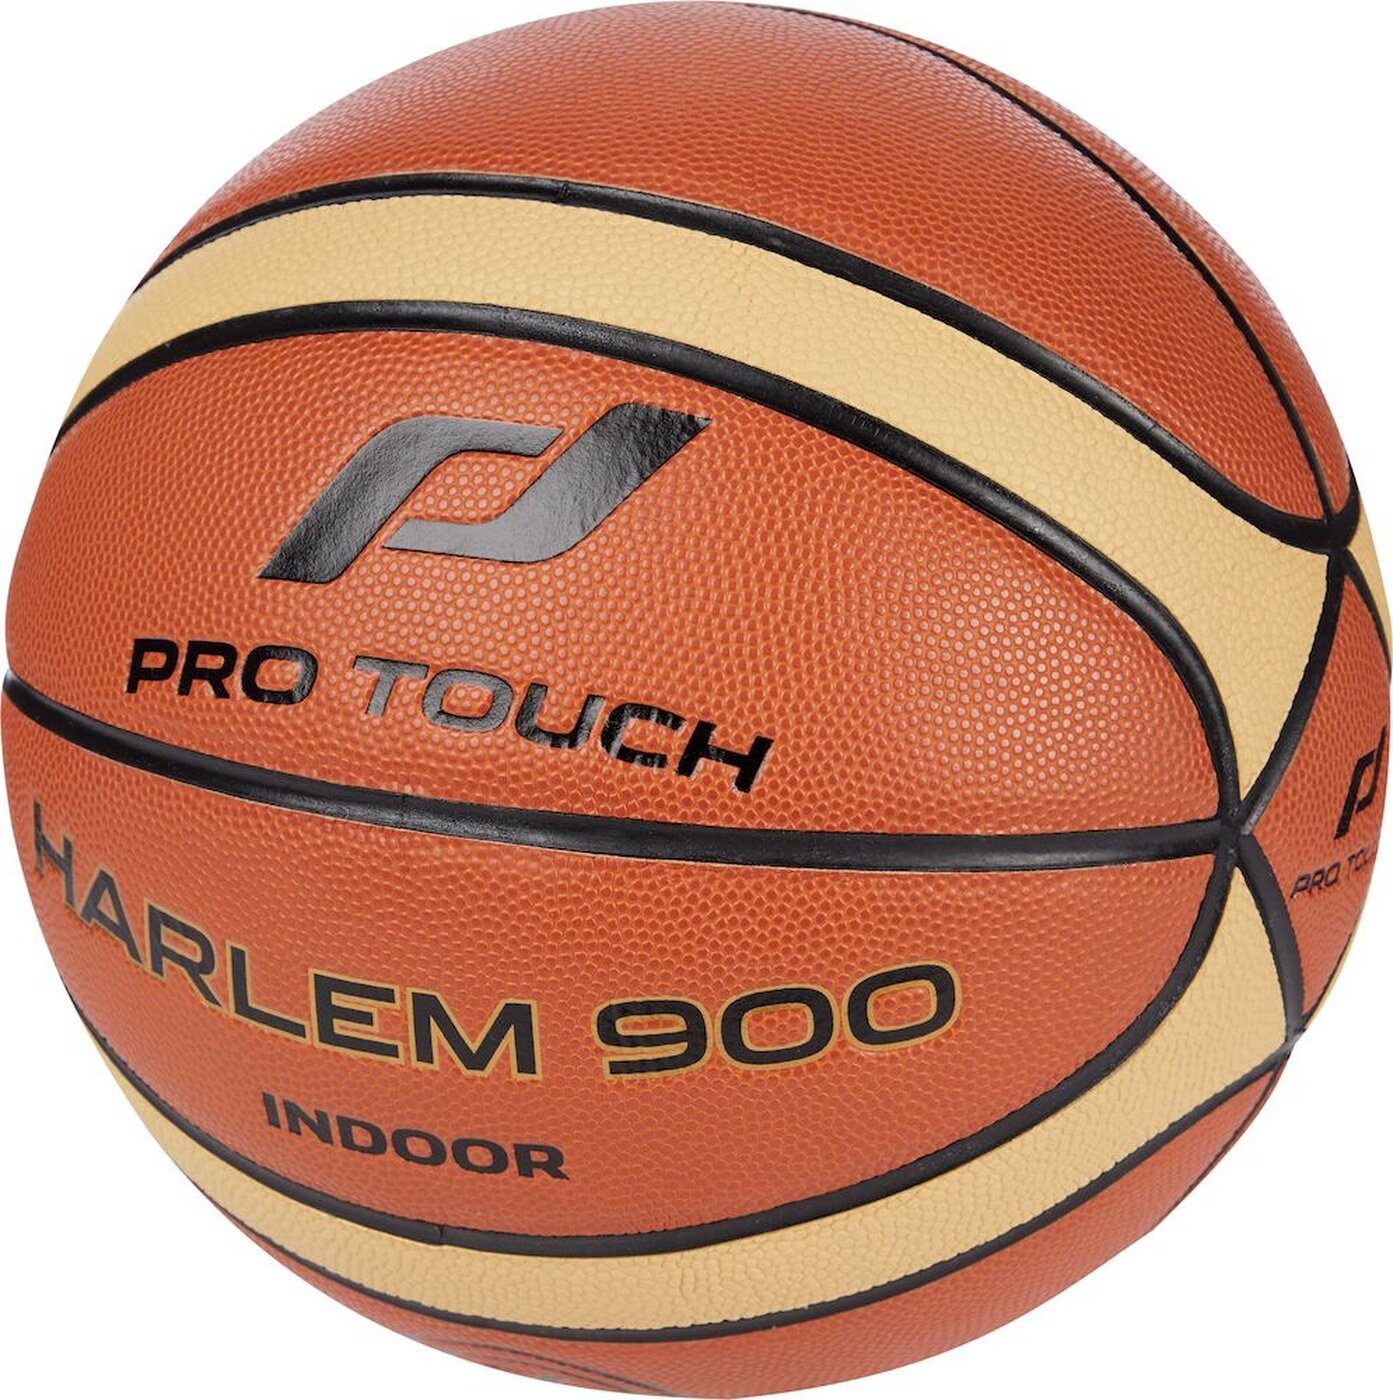 Pro BROWN/BEIGE/BLACK/GO 900 Touch Basketball Harlem Basketball